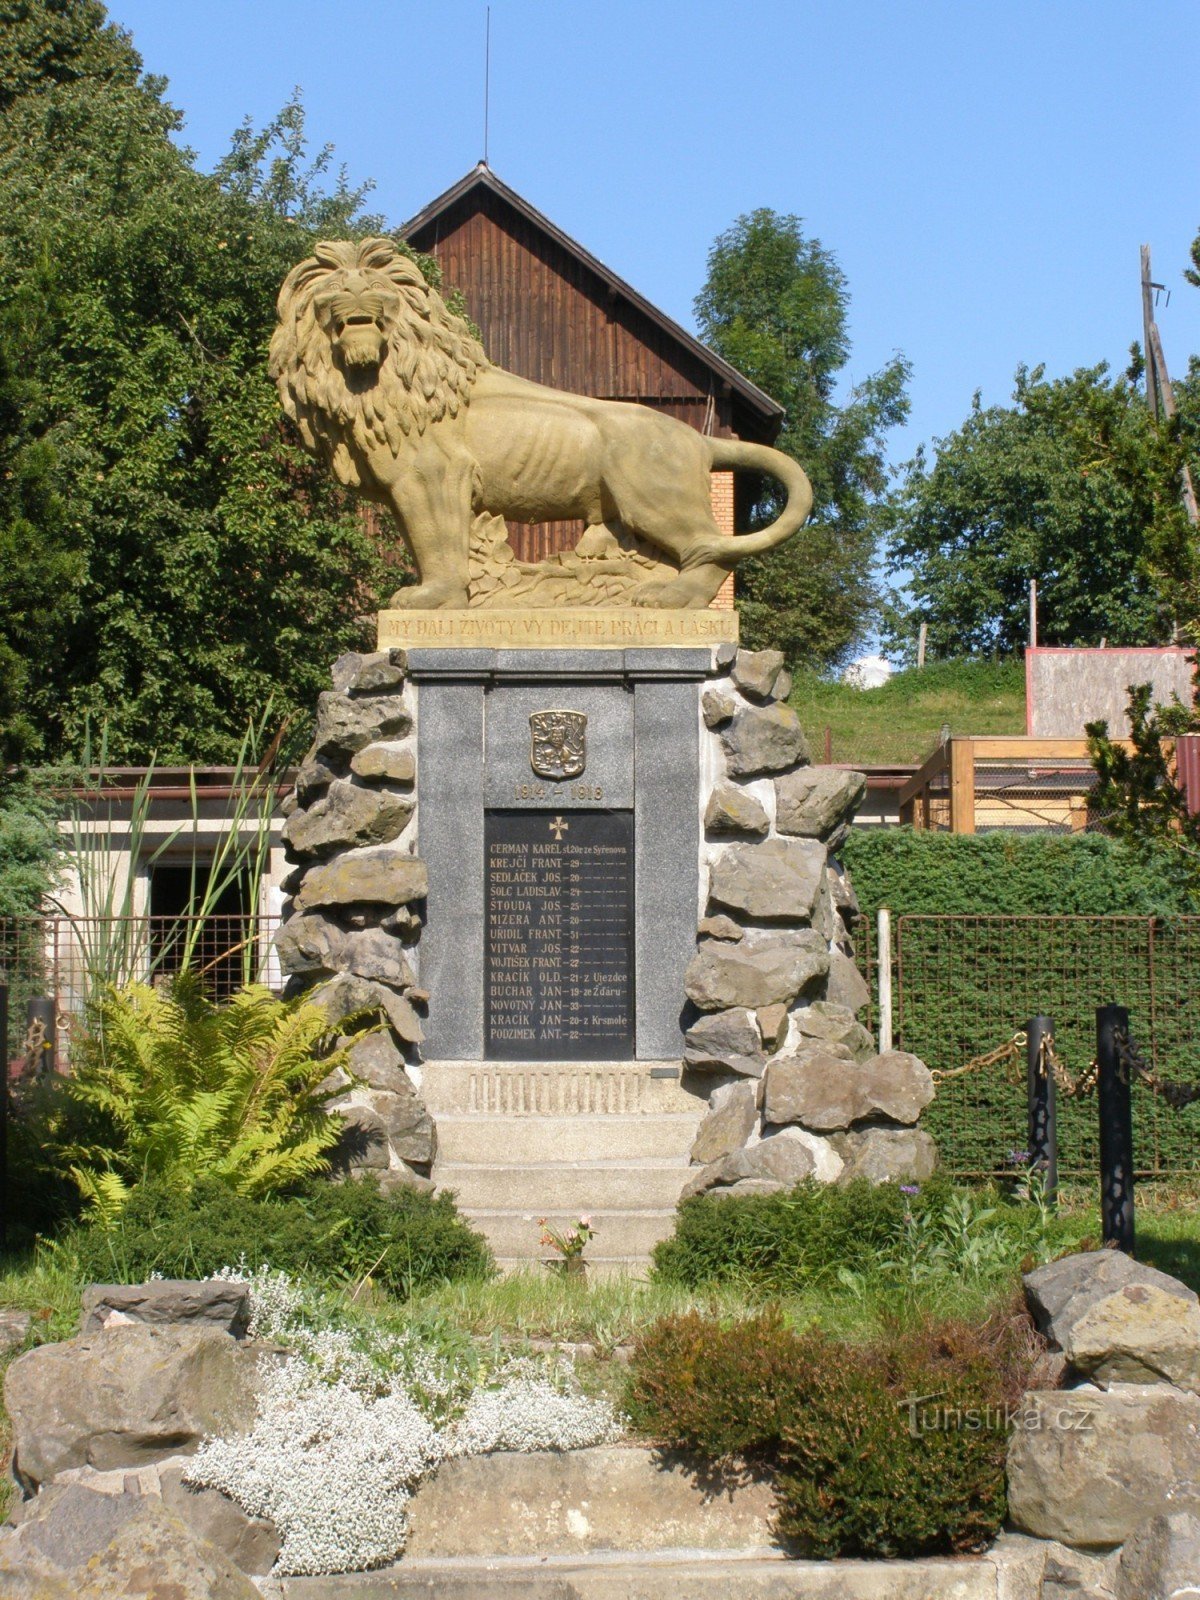 Syřenov - monument al victimelor Primului Sf. război